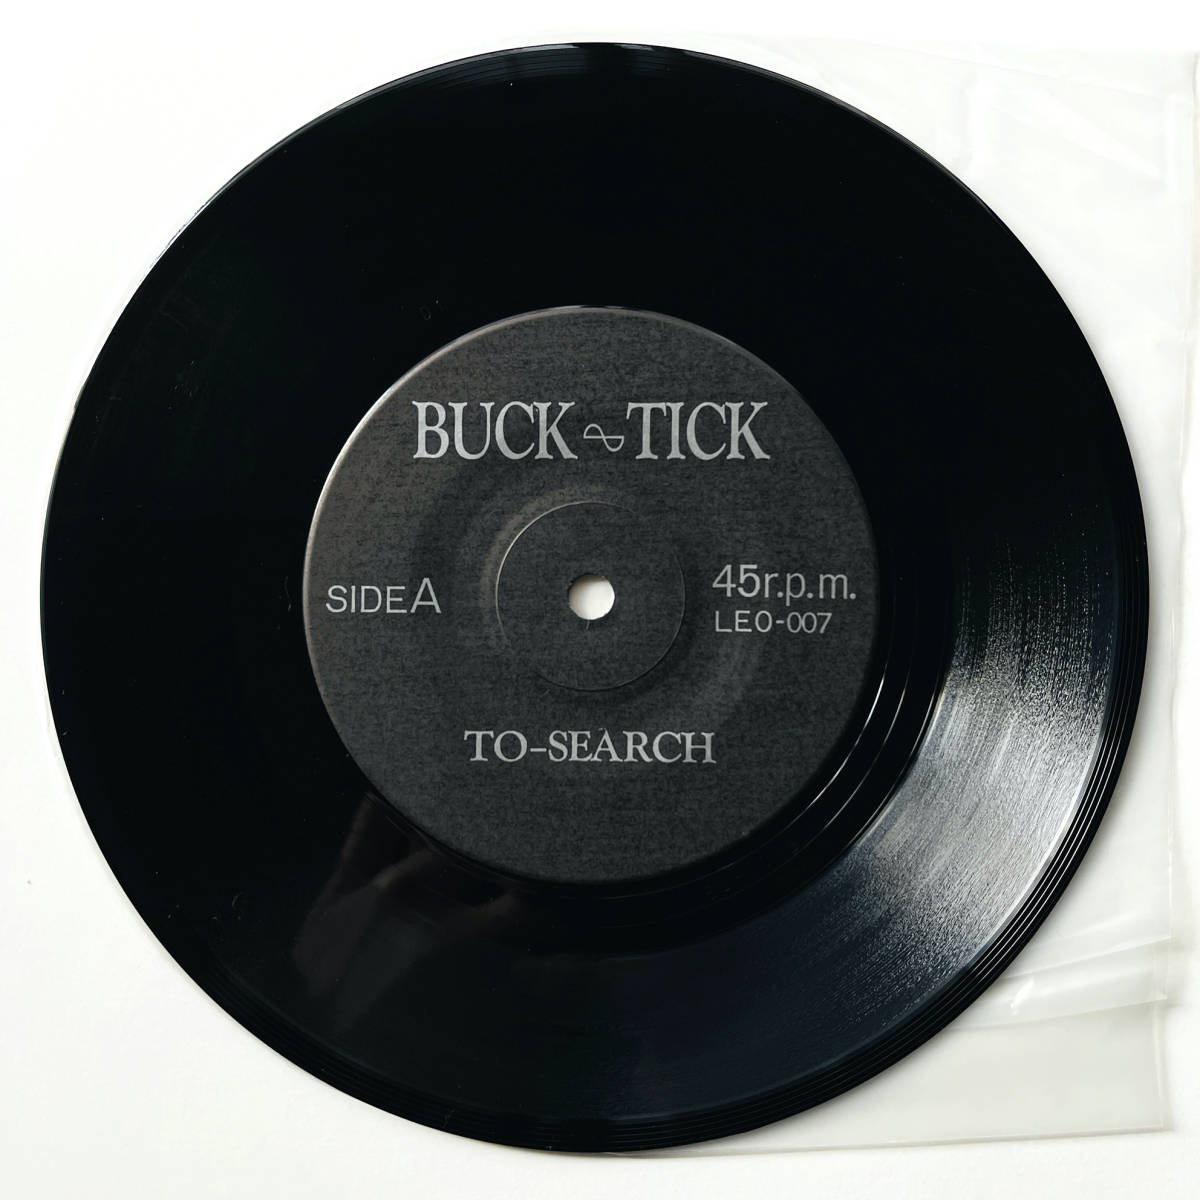  ценный запись 7 дюймовый запись ( BUCK-TICK - To-Search ) Sakurai ..bakchiktu* search / Plastic Syndrome